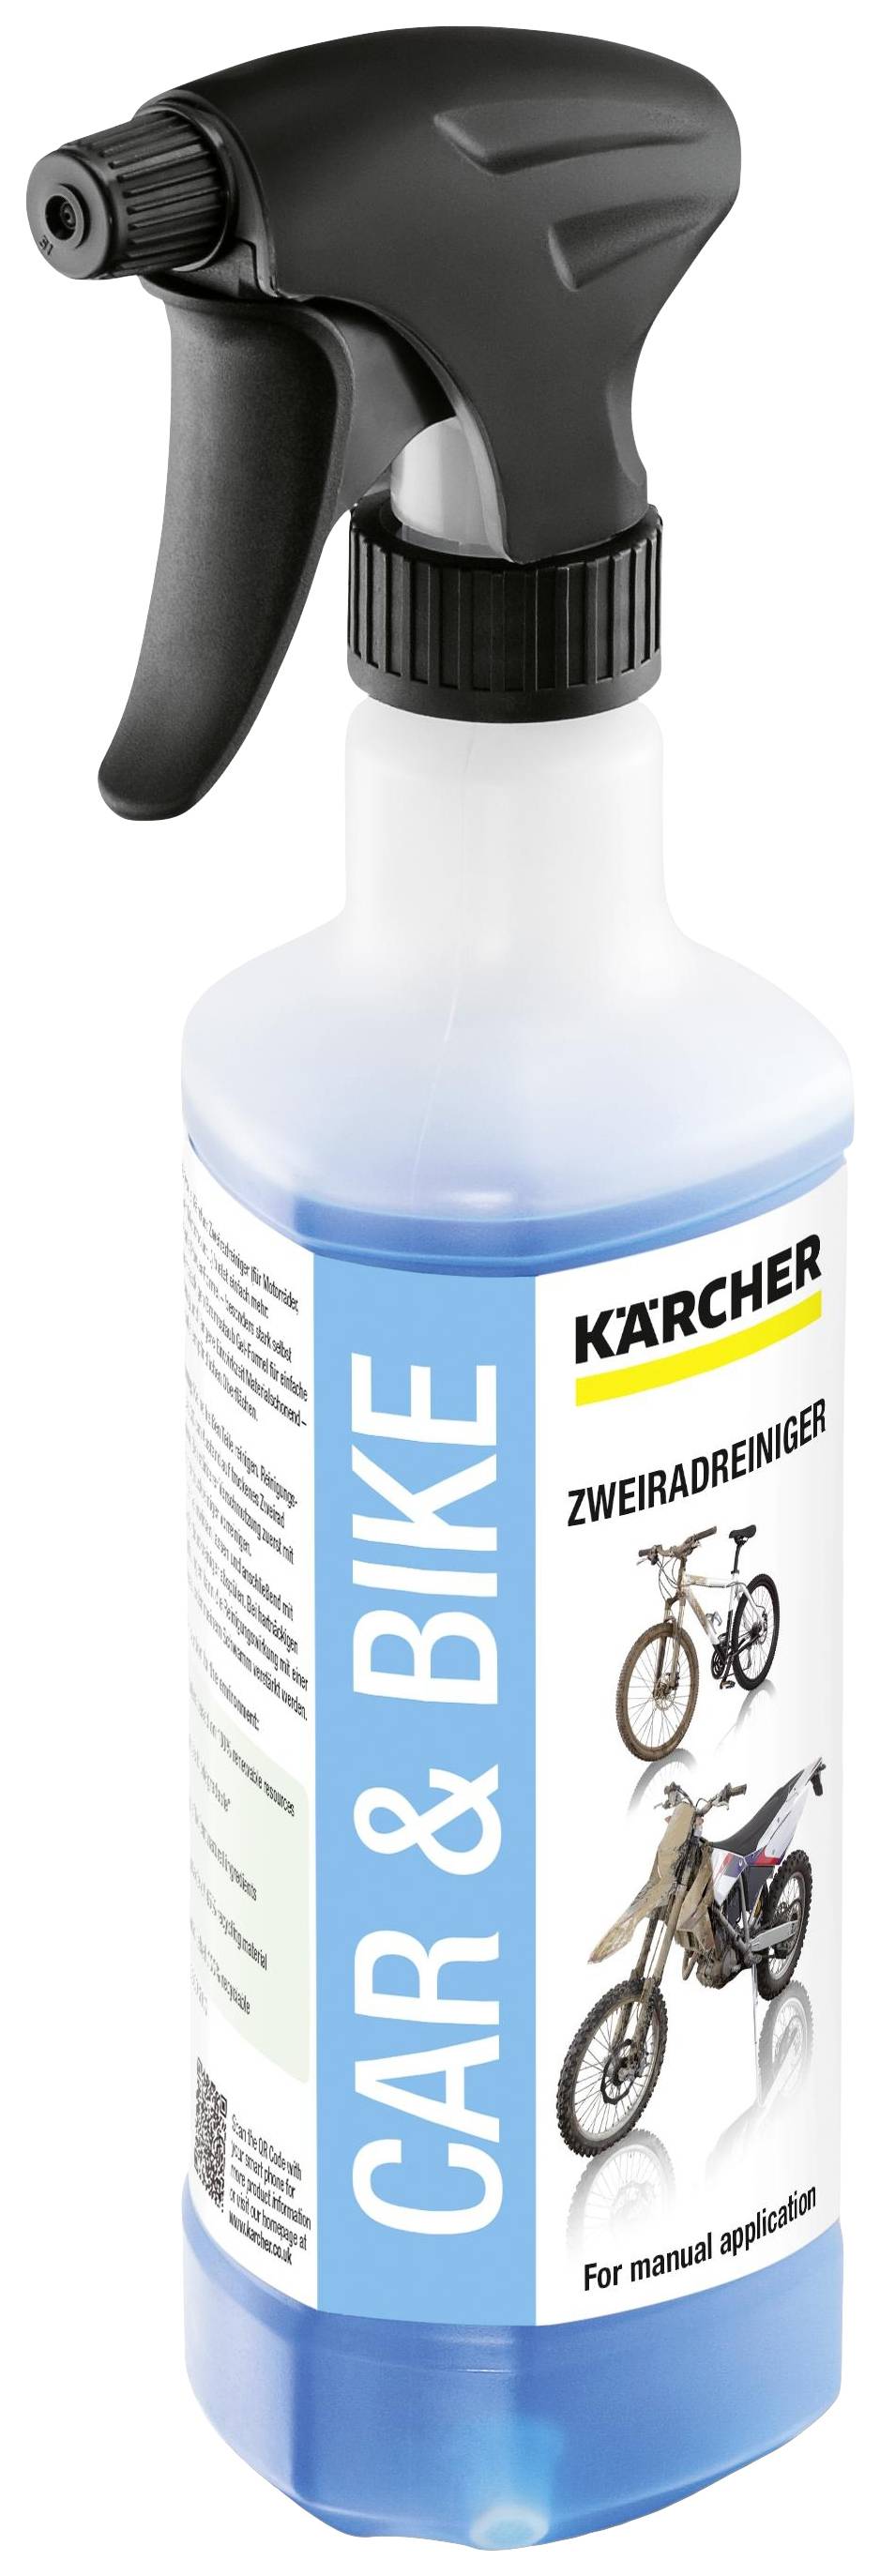 Karcher Rim Cleaner - 500 ml